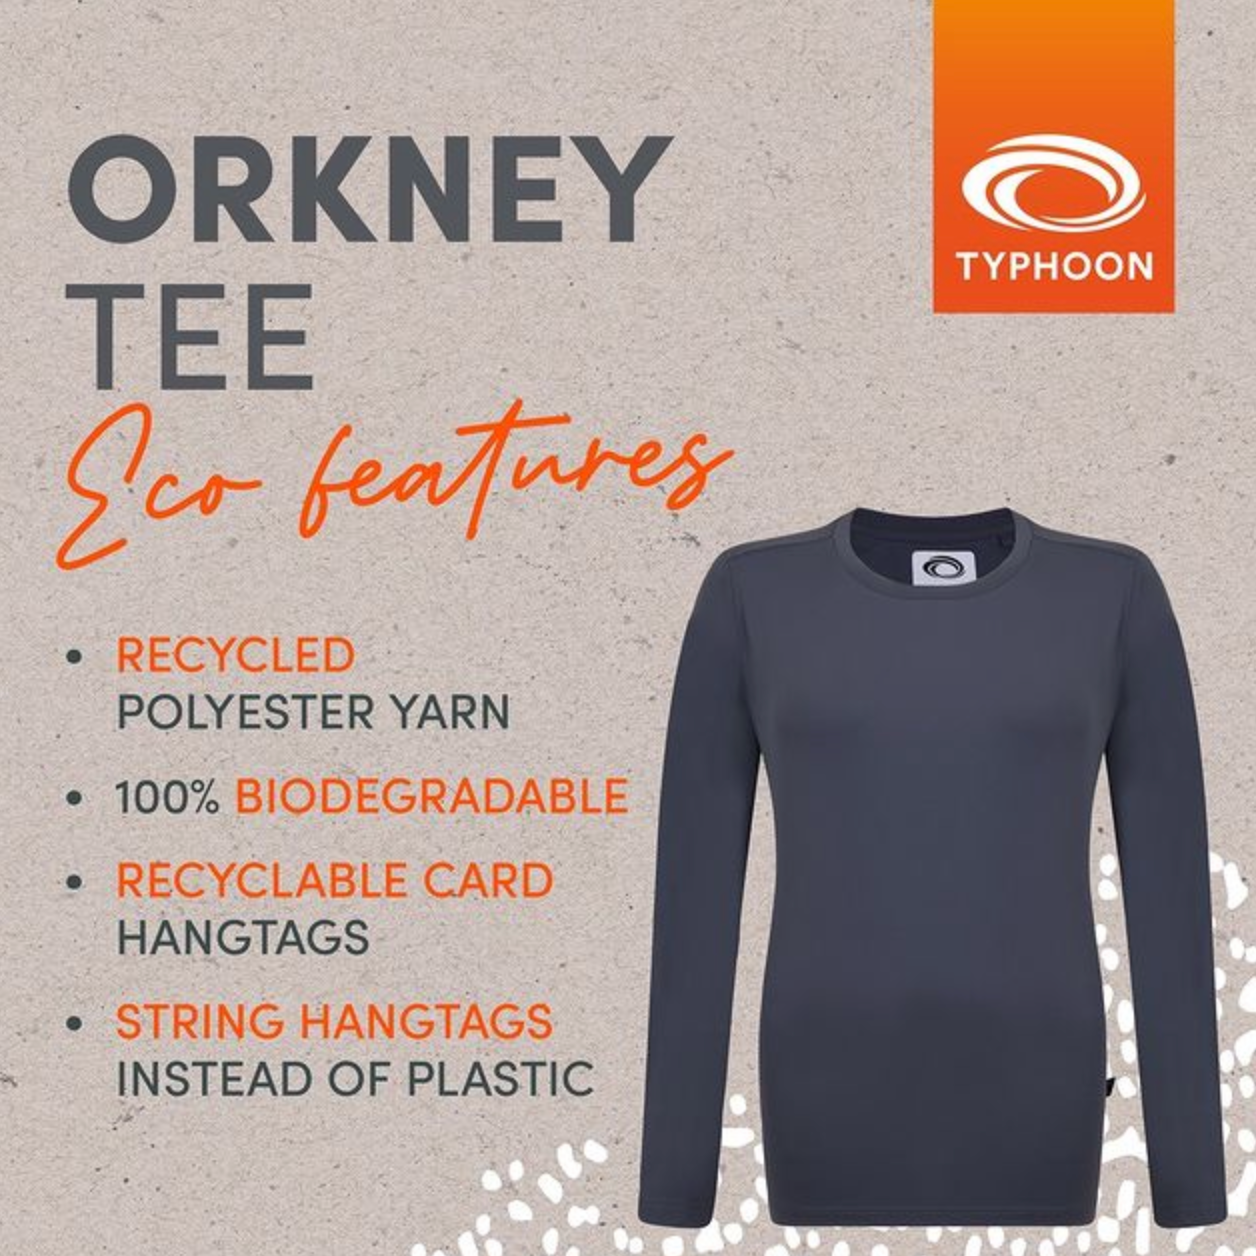 Typhoon Orkney Long Sleeve Tech Tee - Mens